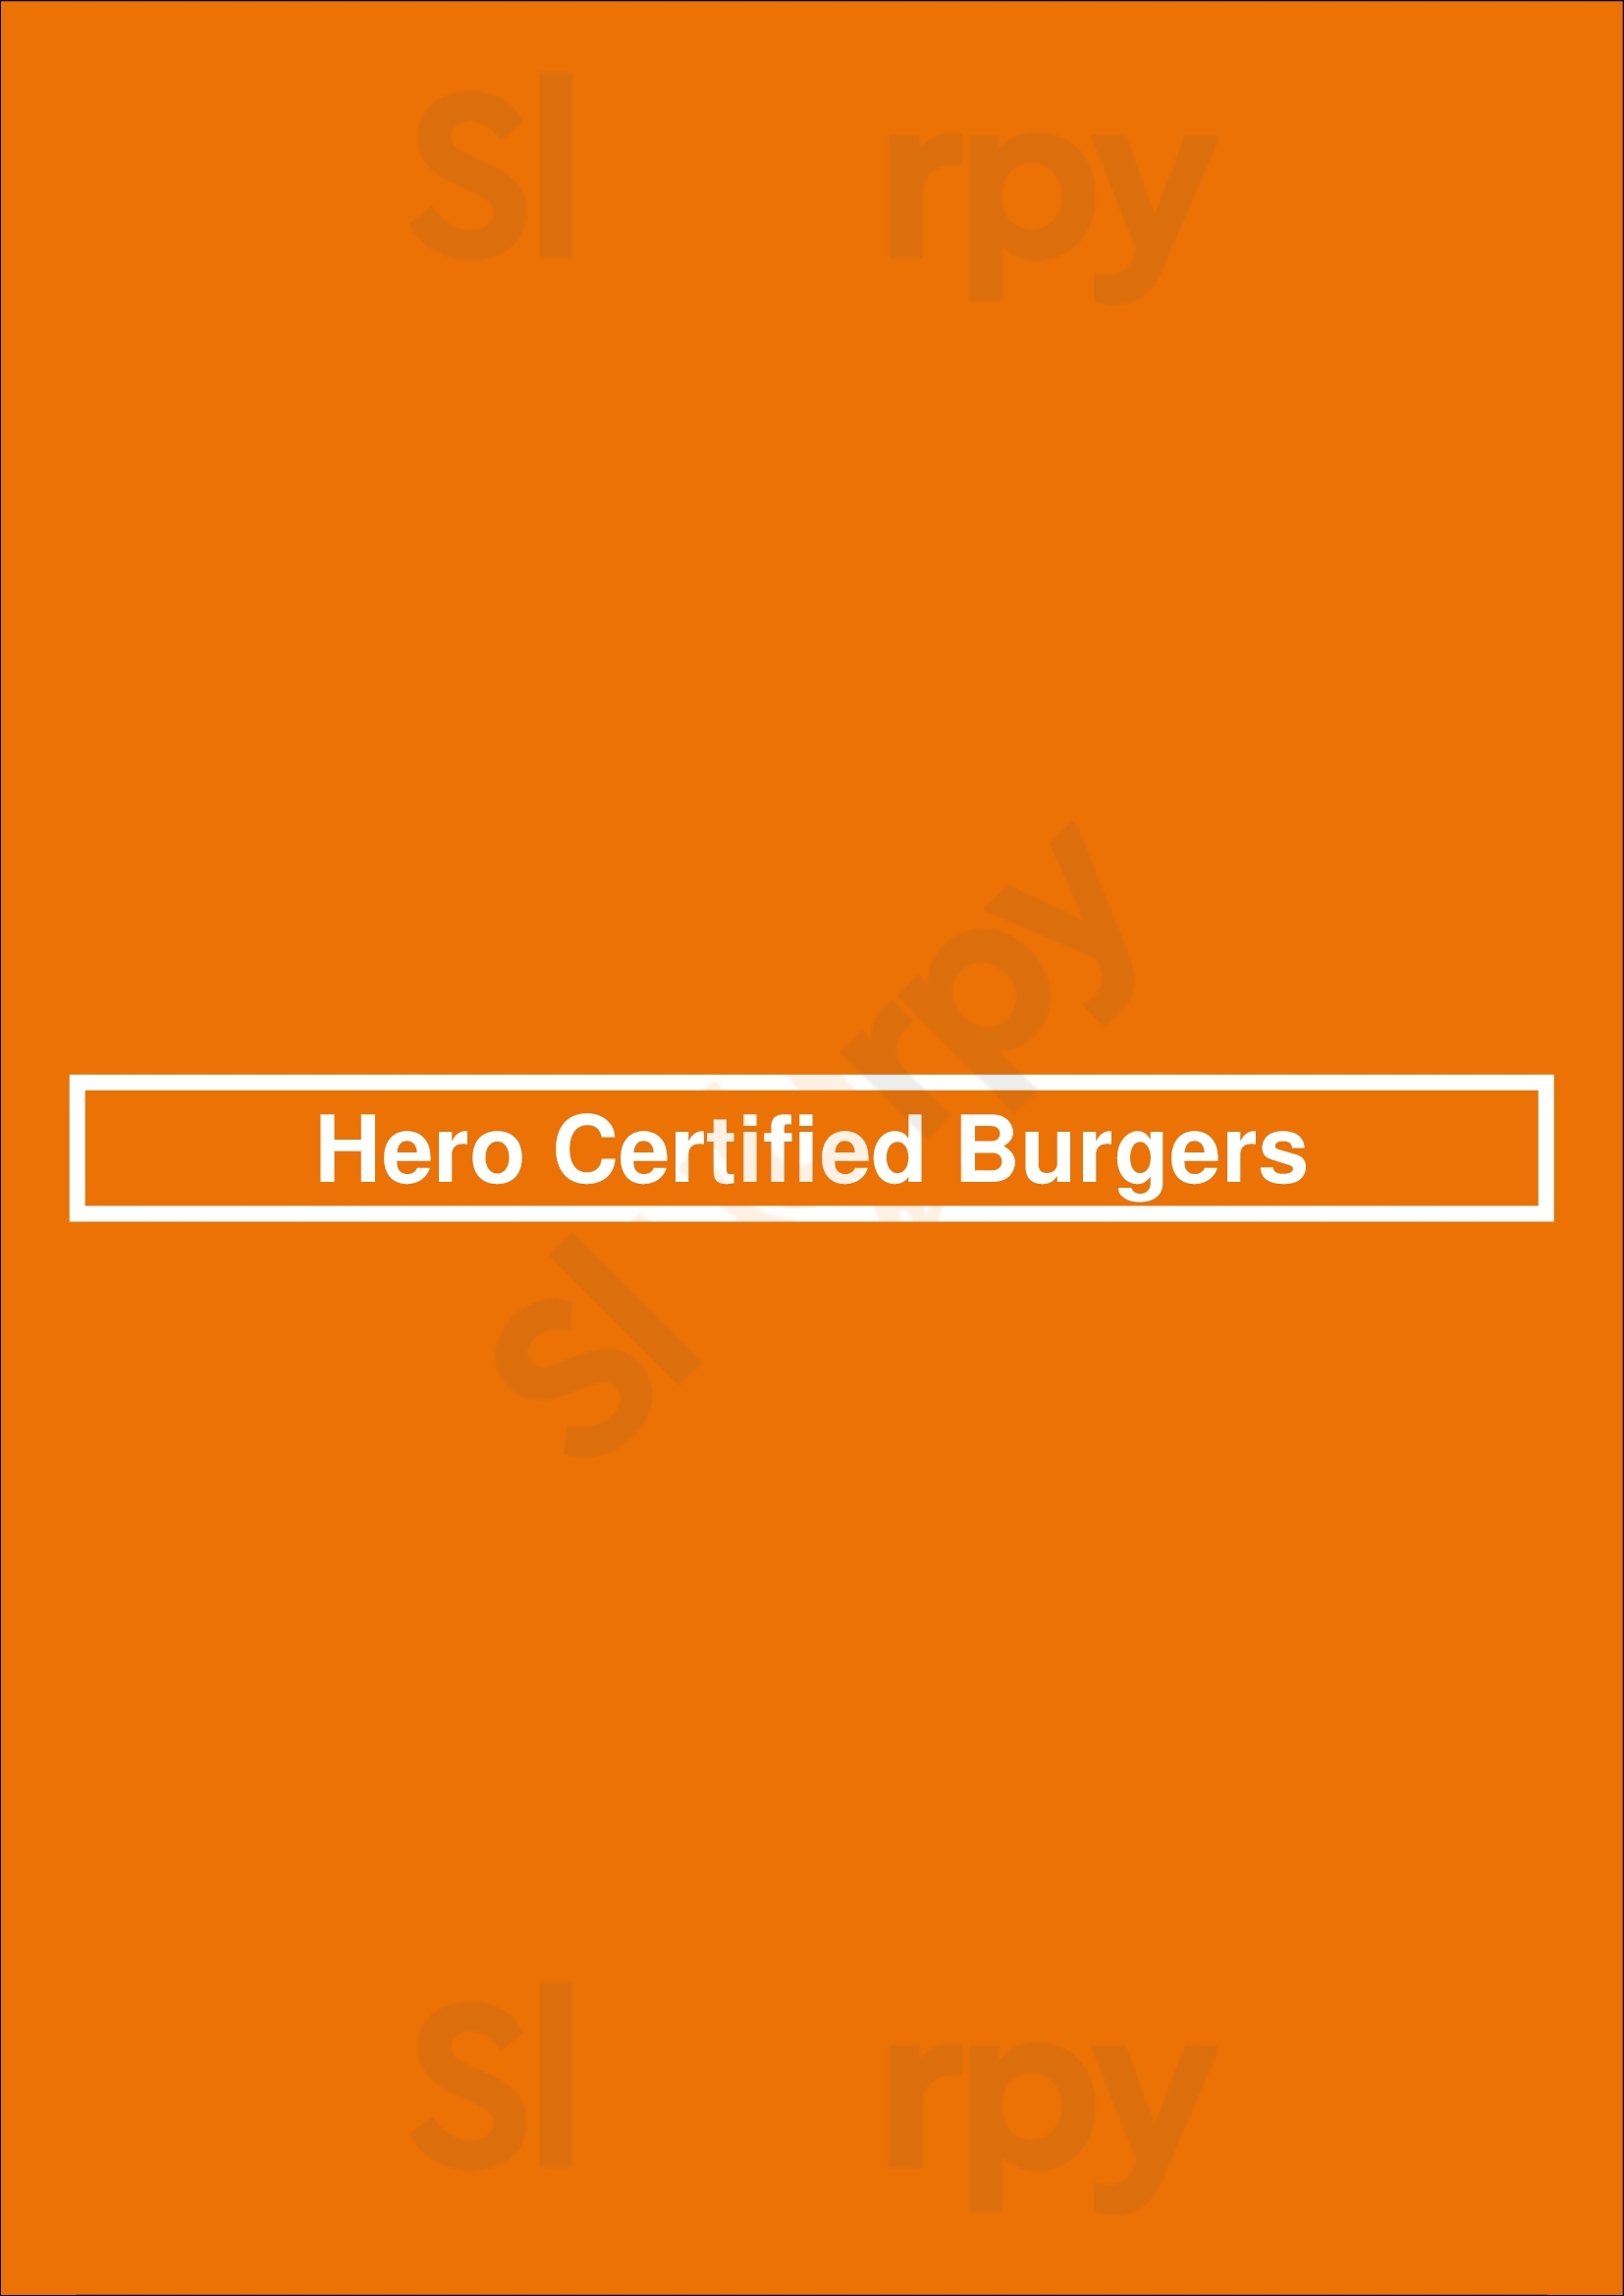 Hero Certified Burgers Mississauga Menu - 1